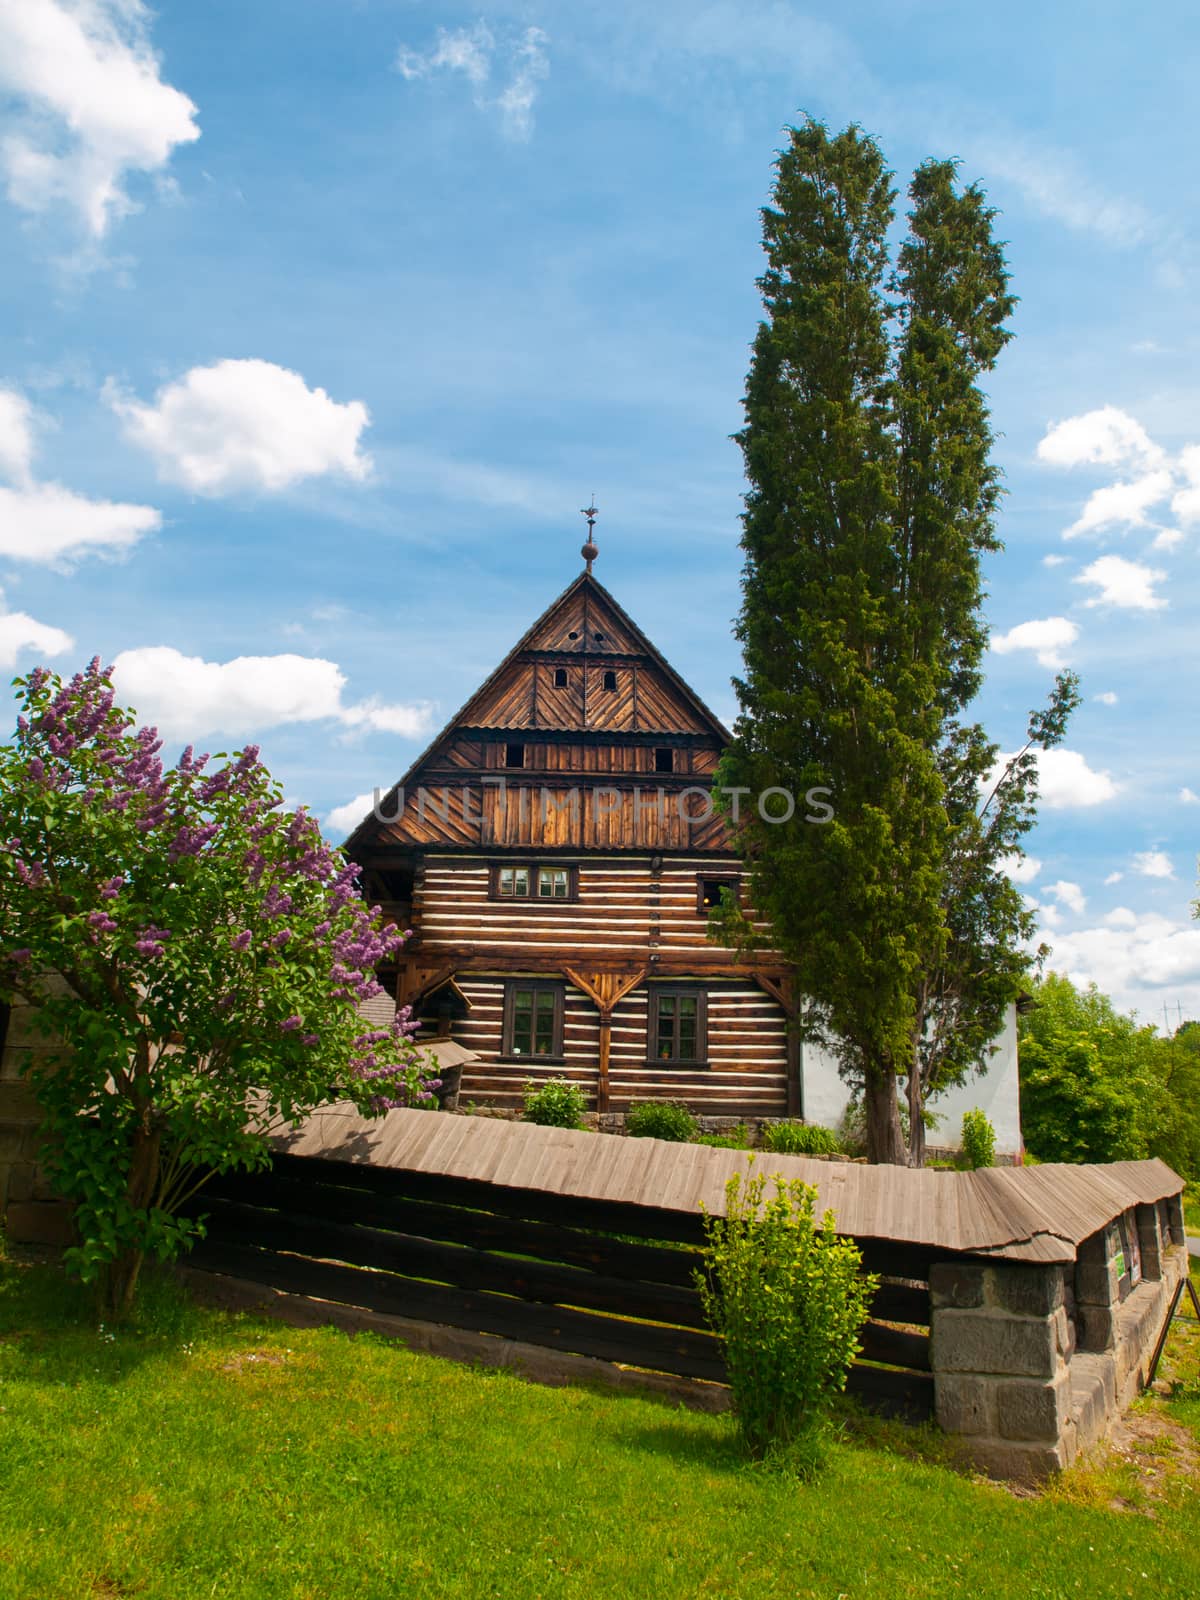 The Dlaskuv statek Farm - old timbered building typical for Jizera region, Dolanky Village near Turnov in Bohemian Paradise, Czech Republic, Europe. Sunny summer day shot with blue sky.